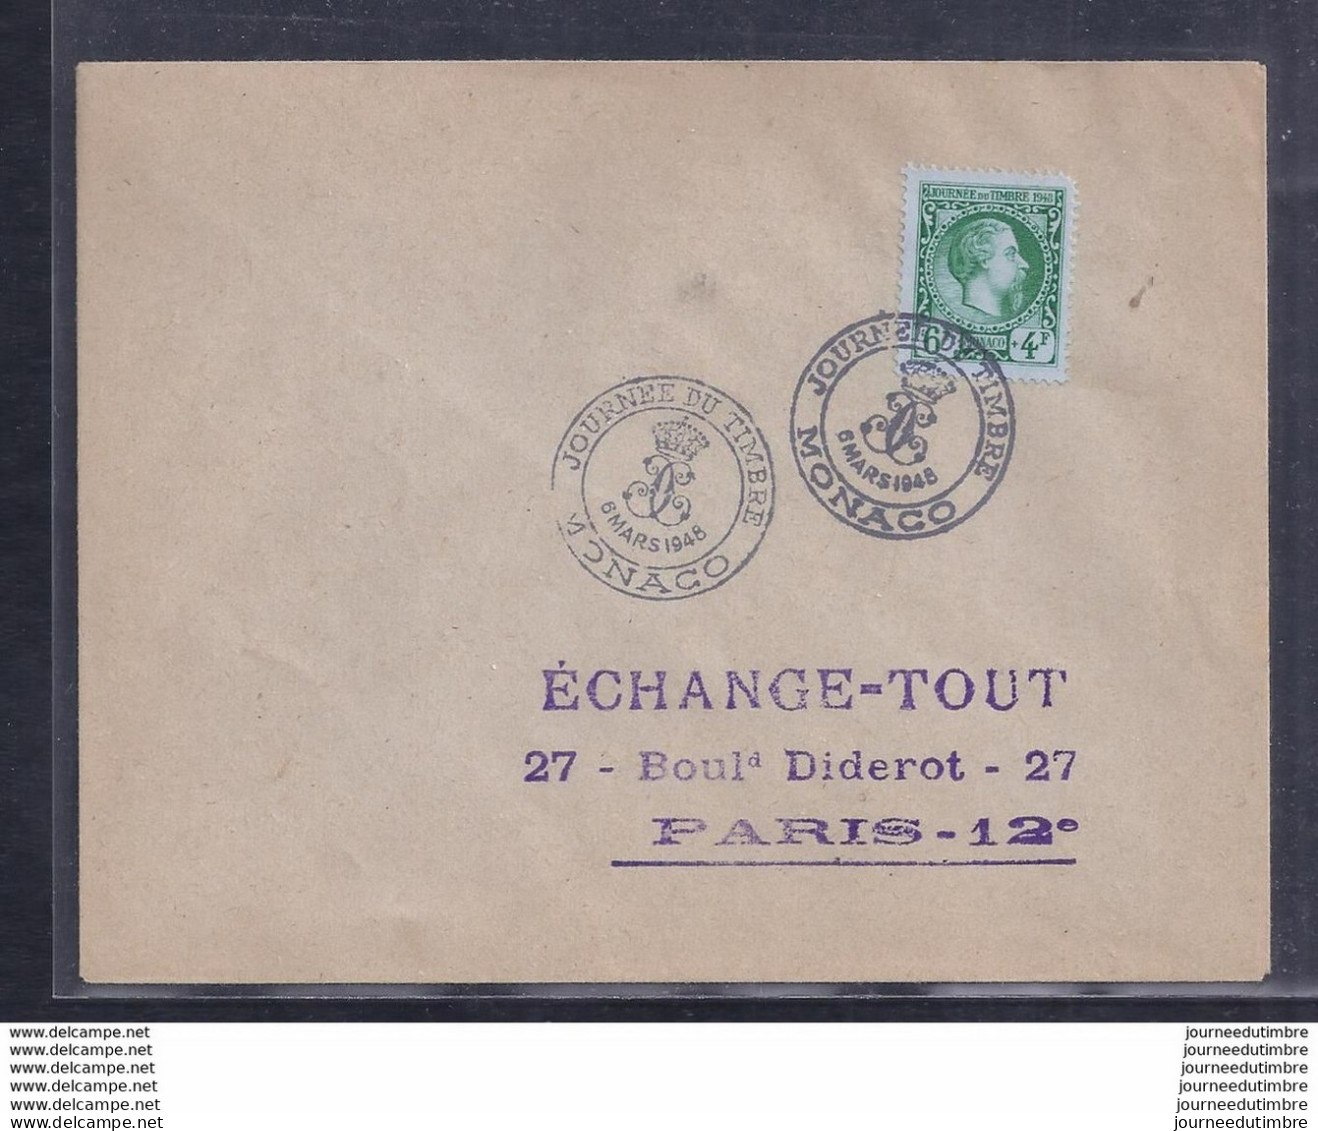 Enveloppe Locale Journee Du Timbre 1948 Monaco - Covers & Documents